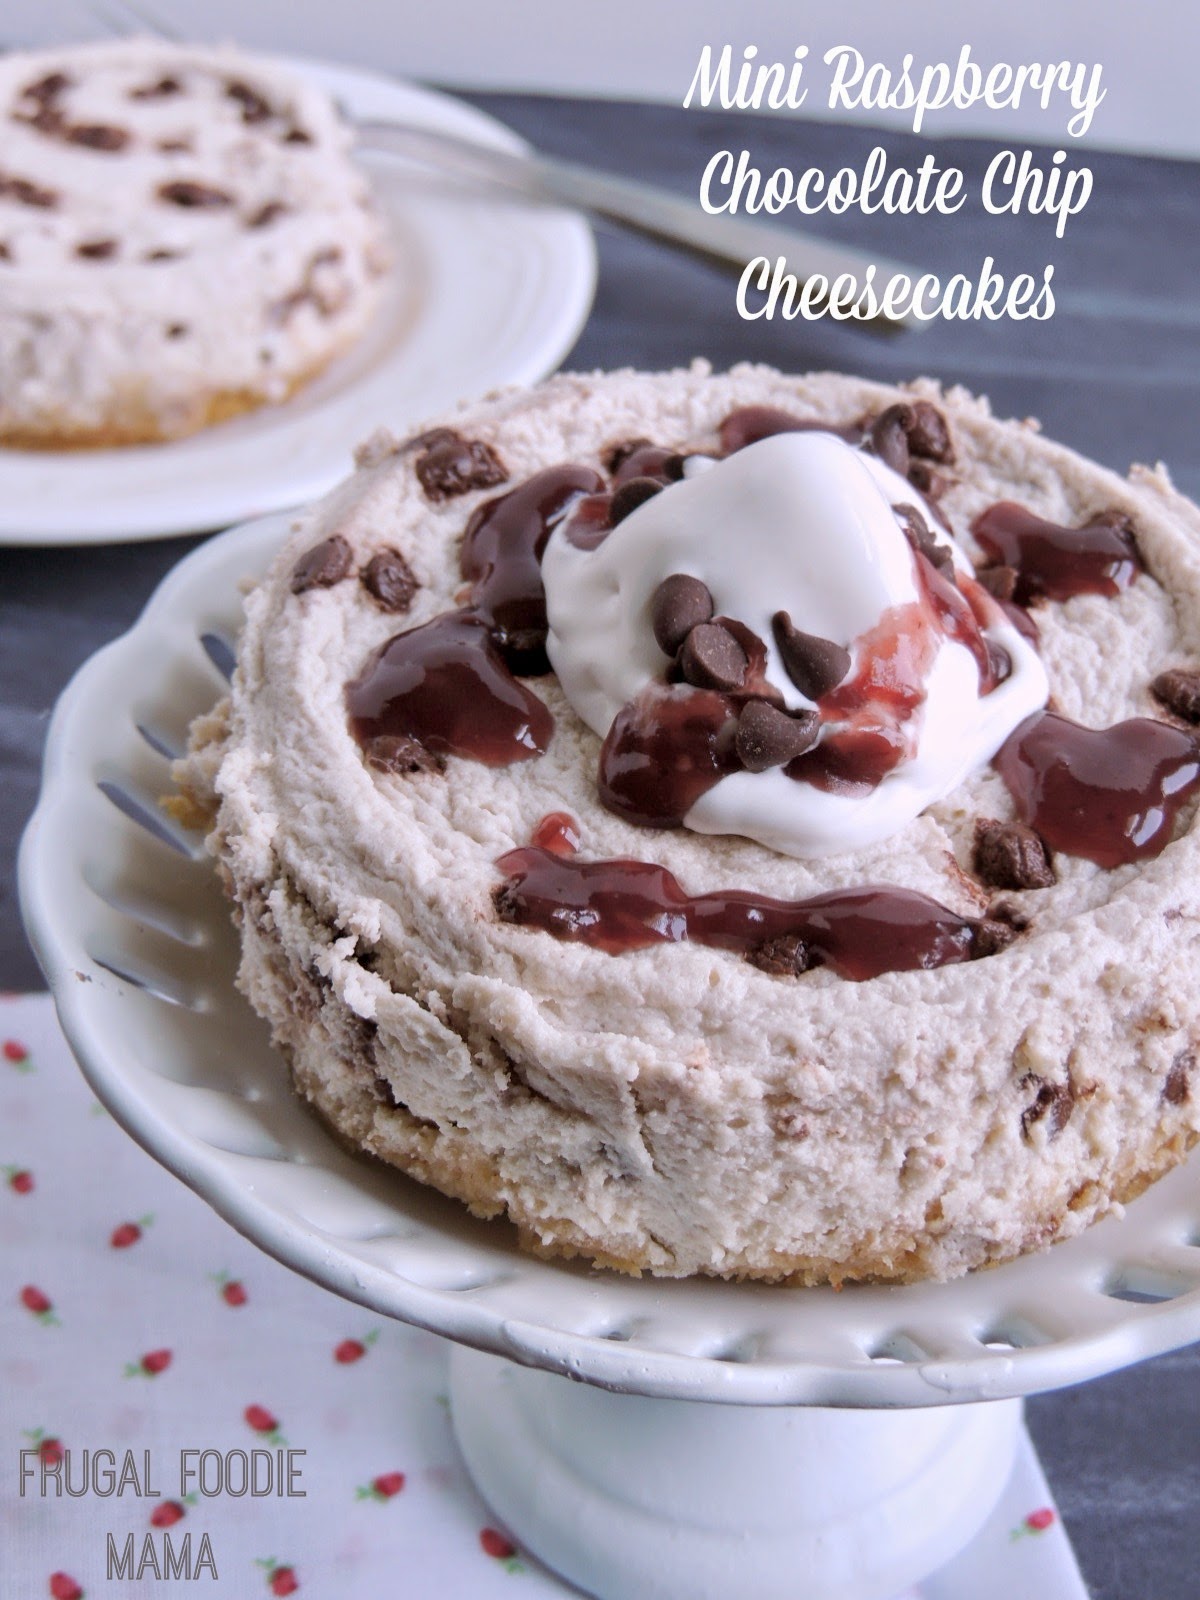 Mini Raspberry Chocolate Chip Cheesecakes via thefrugalfoodiemama.com #skinnydessert #lowfat #Greekyogurt